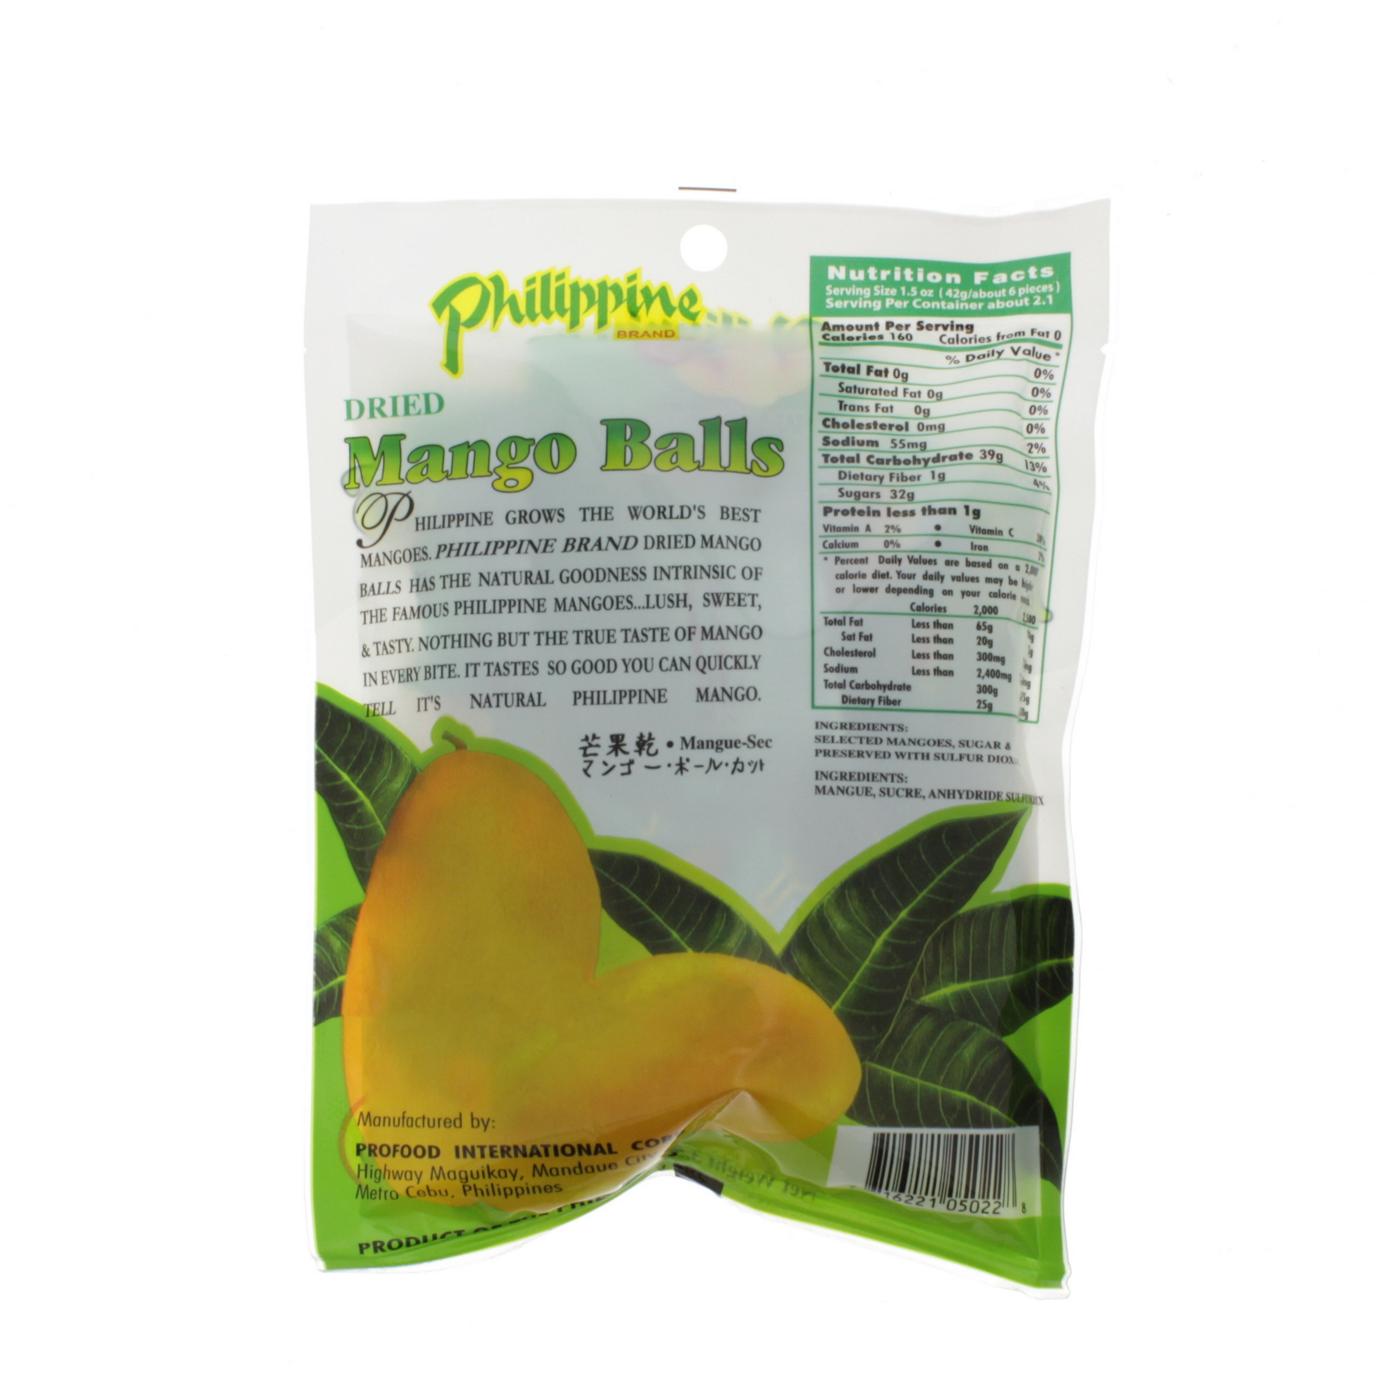 Philippine Dried Mango Balls; image 2 of 2